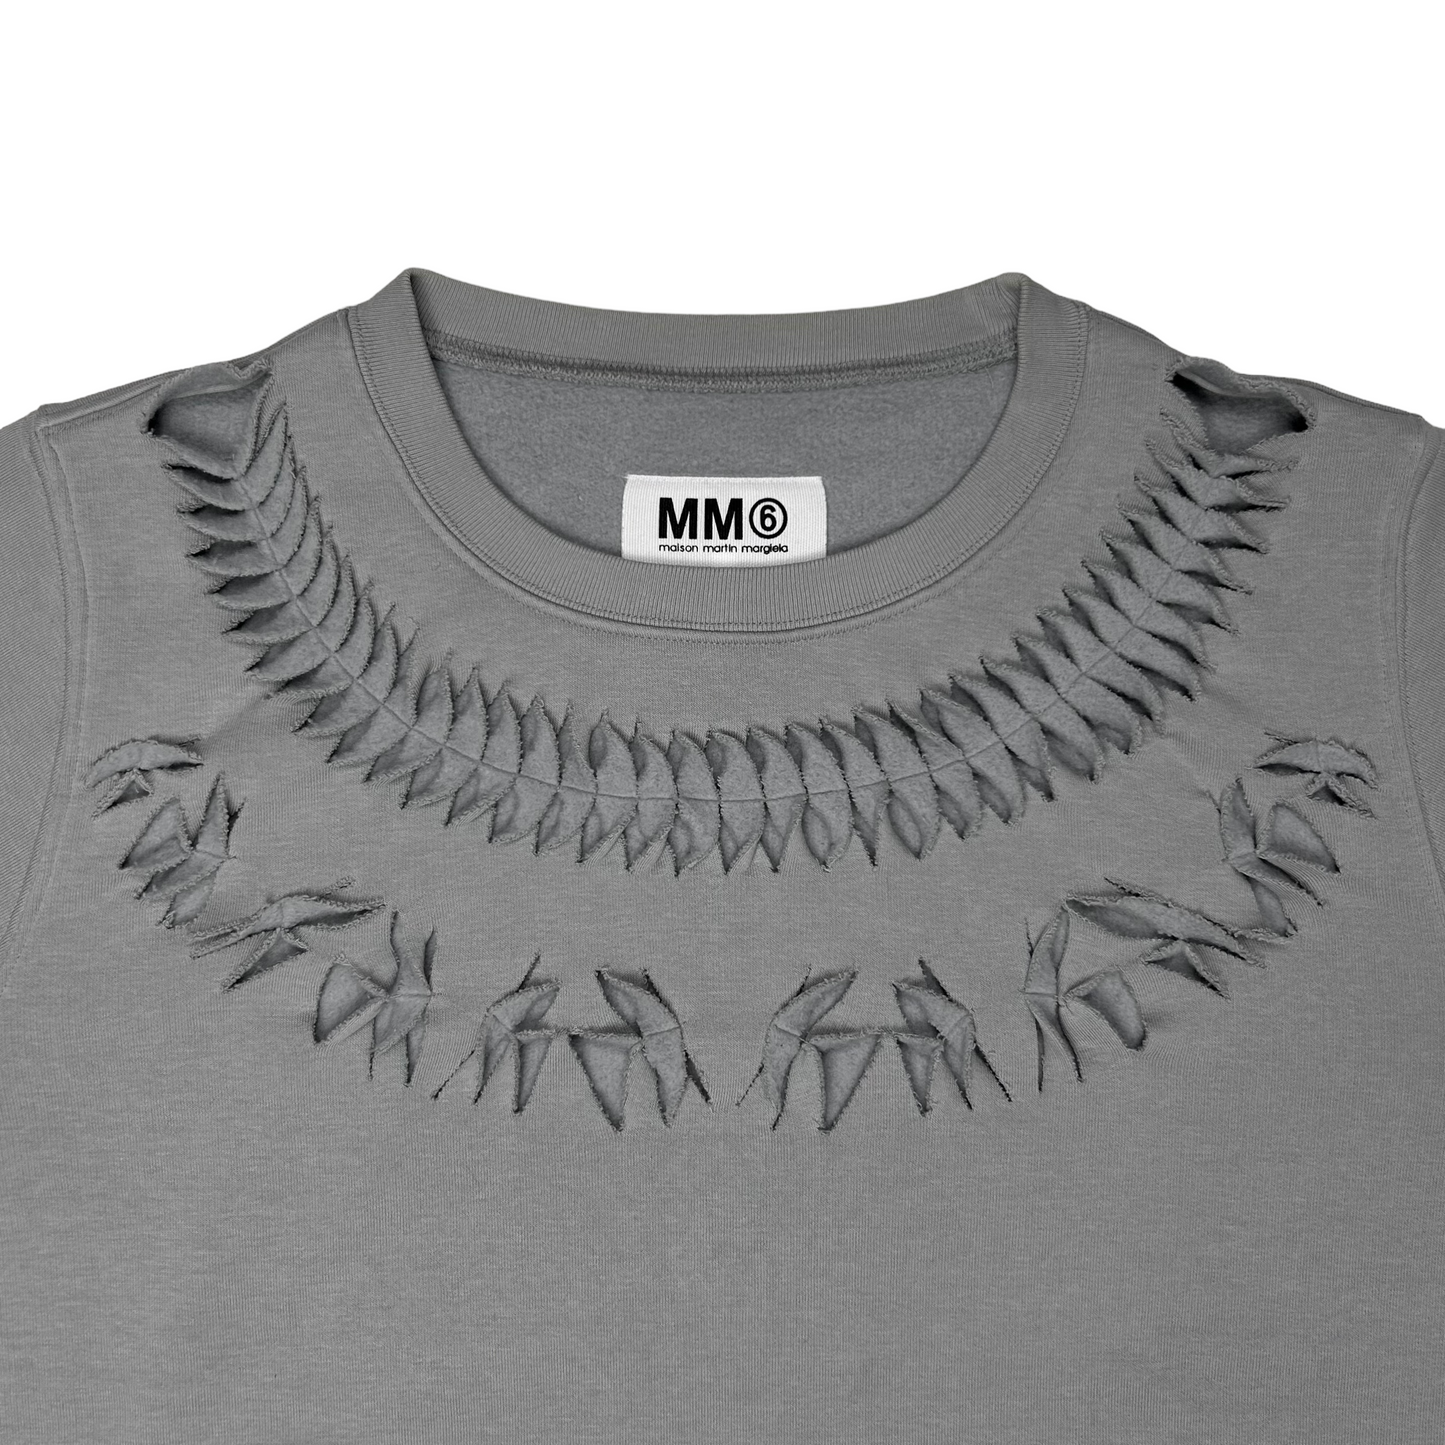 Maison Margiela MM6 Cut Out Hook Sweater - AW12